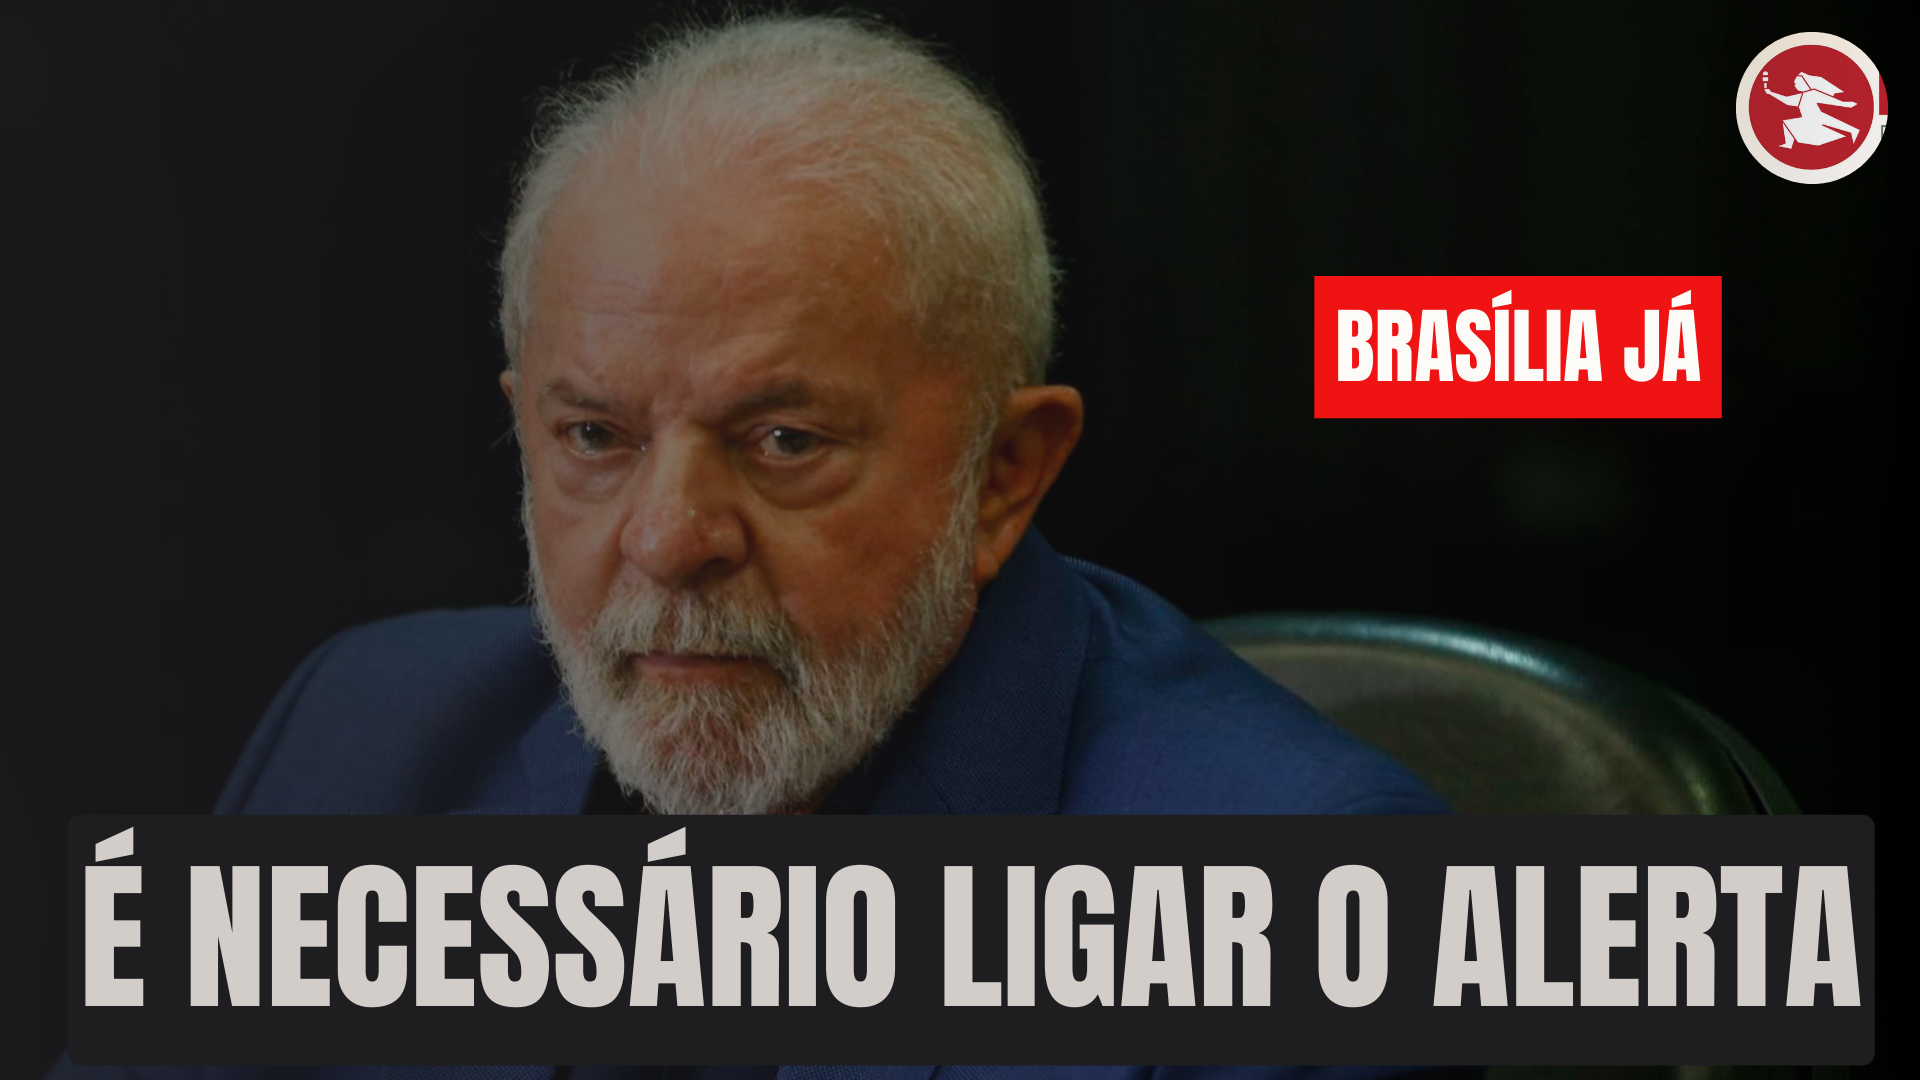 BRASÍLIA JÁ: Sinais de alerta para Lula no Datafolha